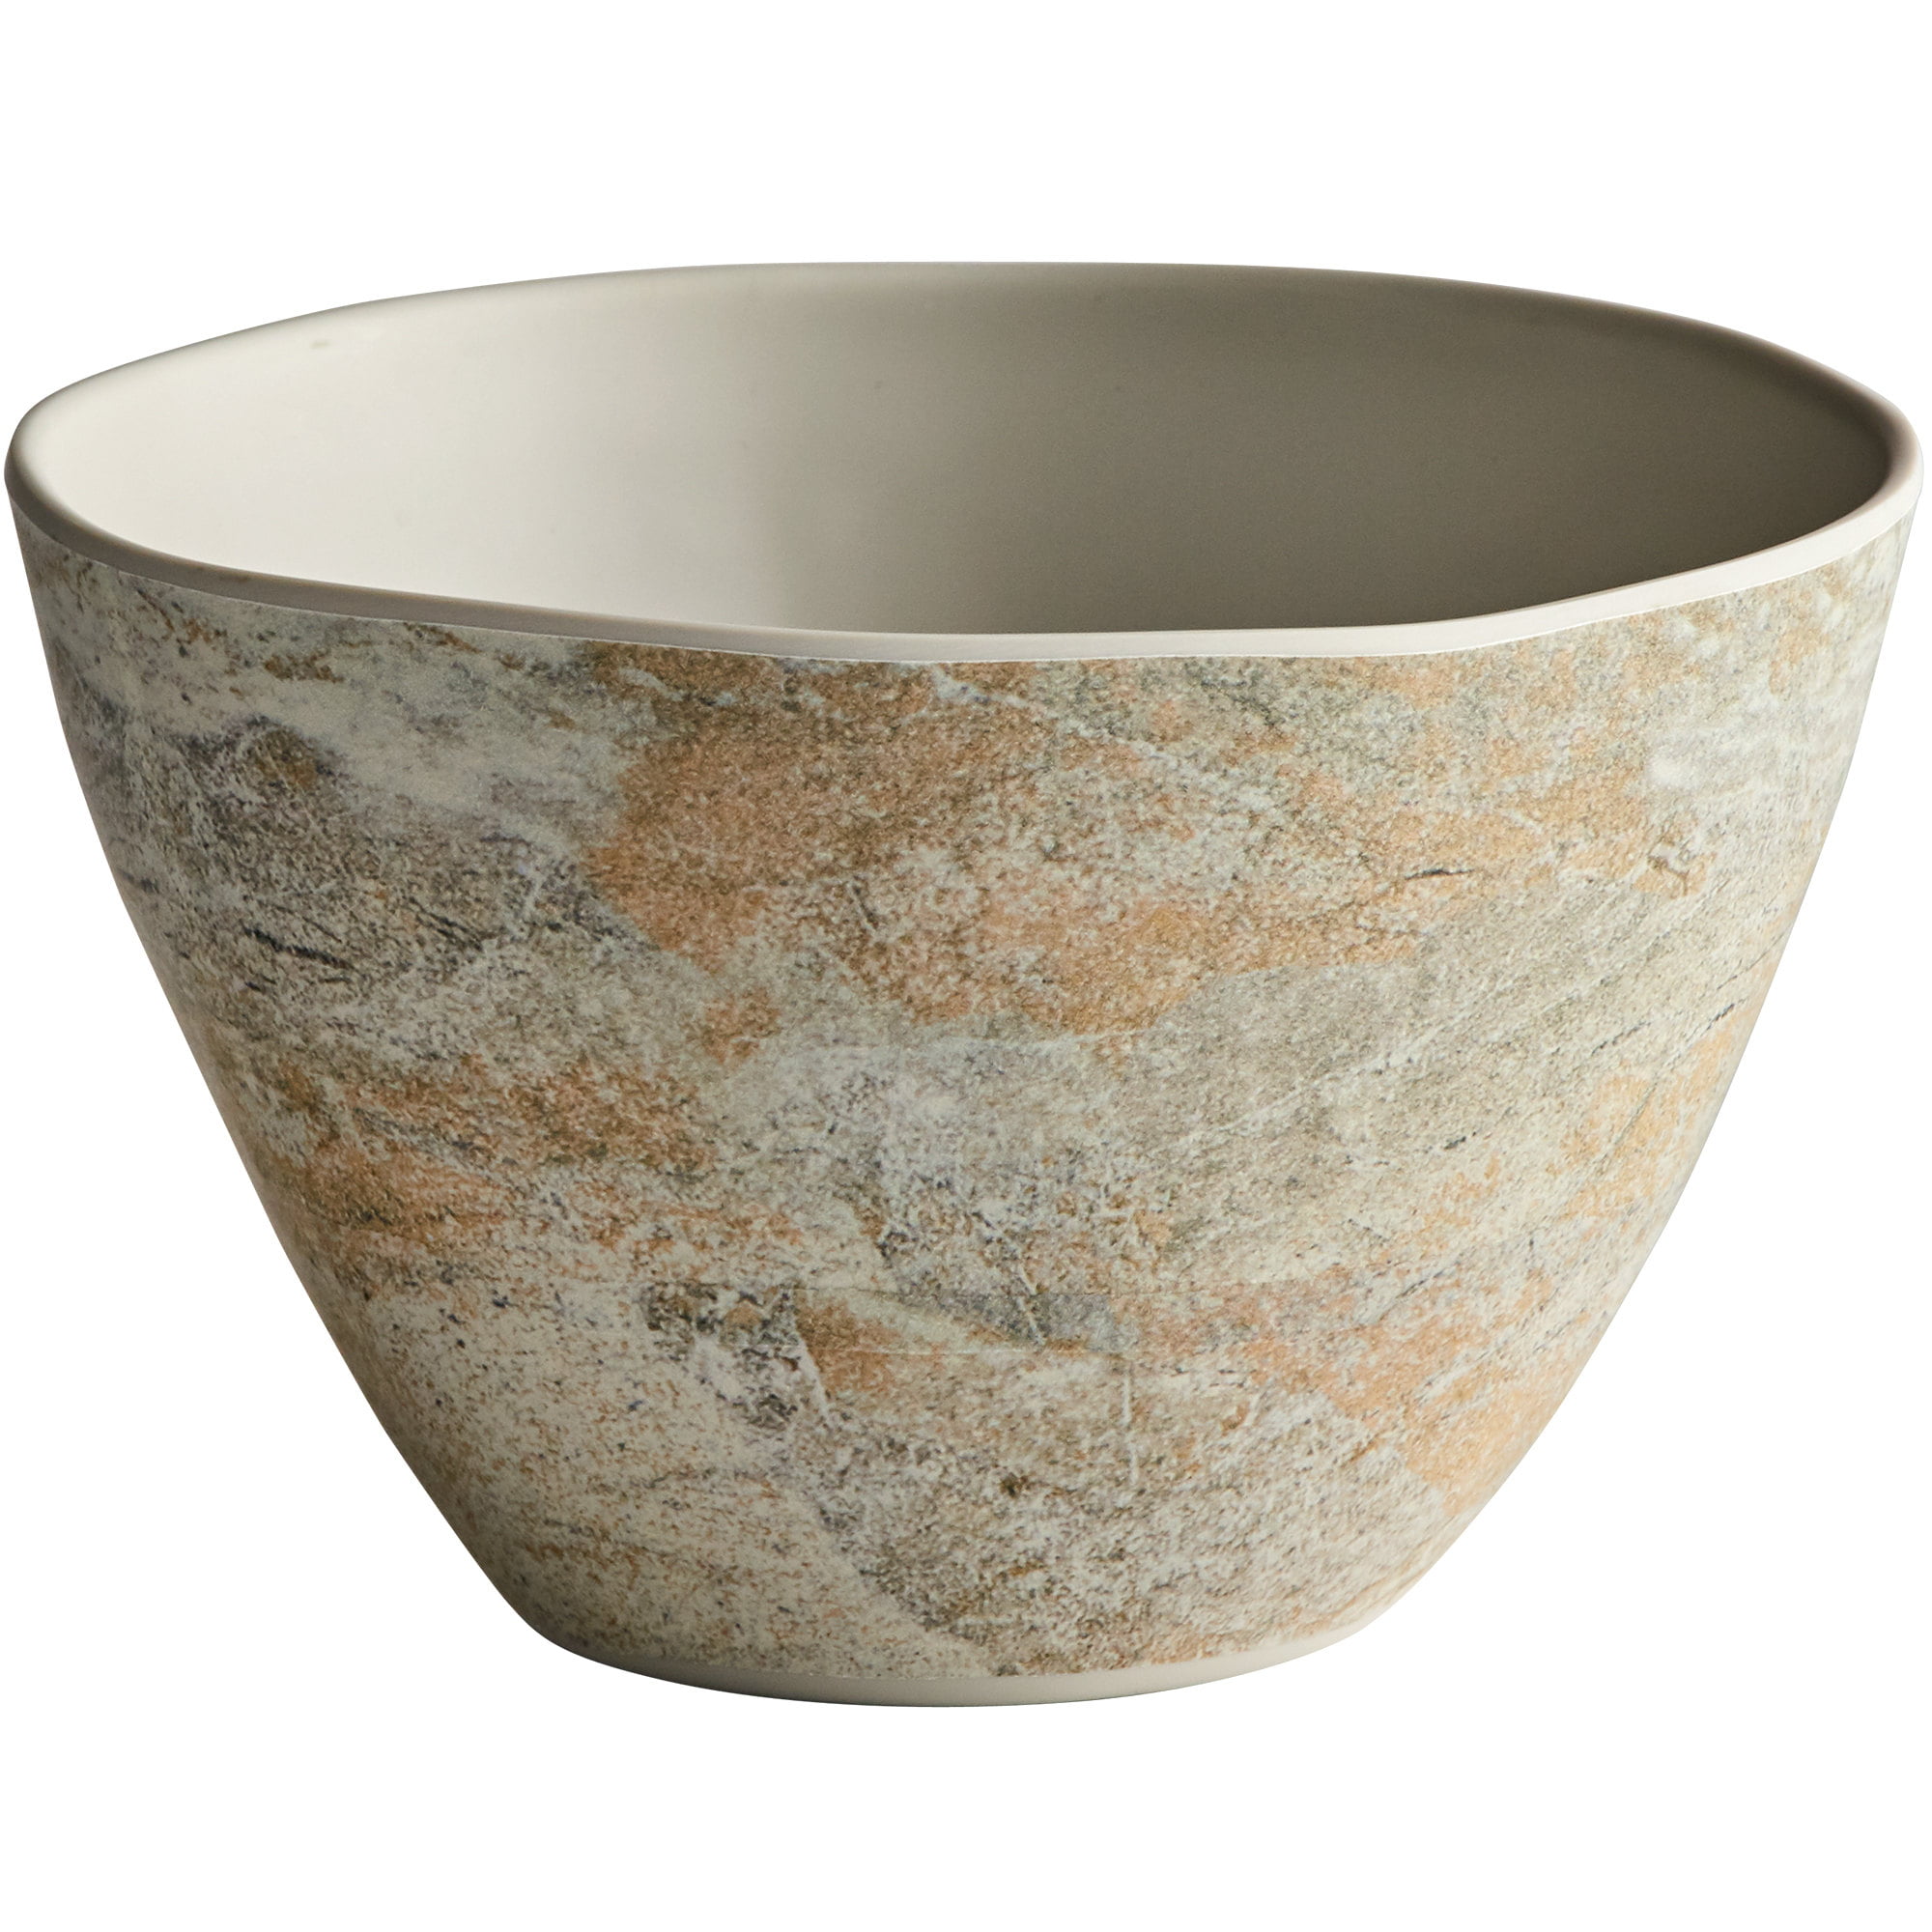 standstone ceramic handmade salad bowl Large bowl or small salad bowl in white glazed stoneware handmade pottery Christmas gift bowl